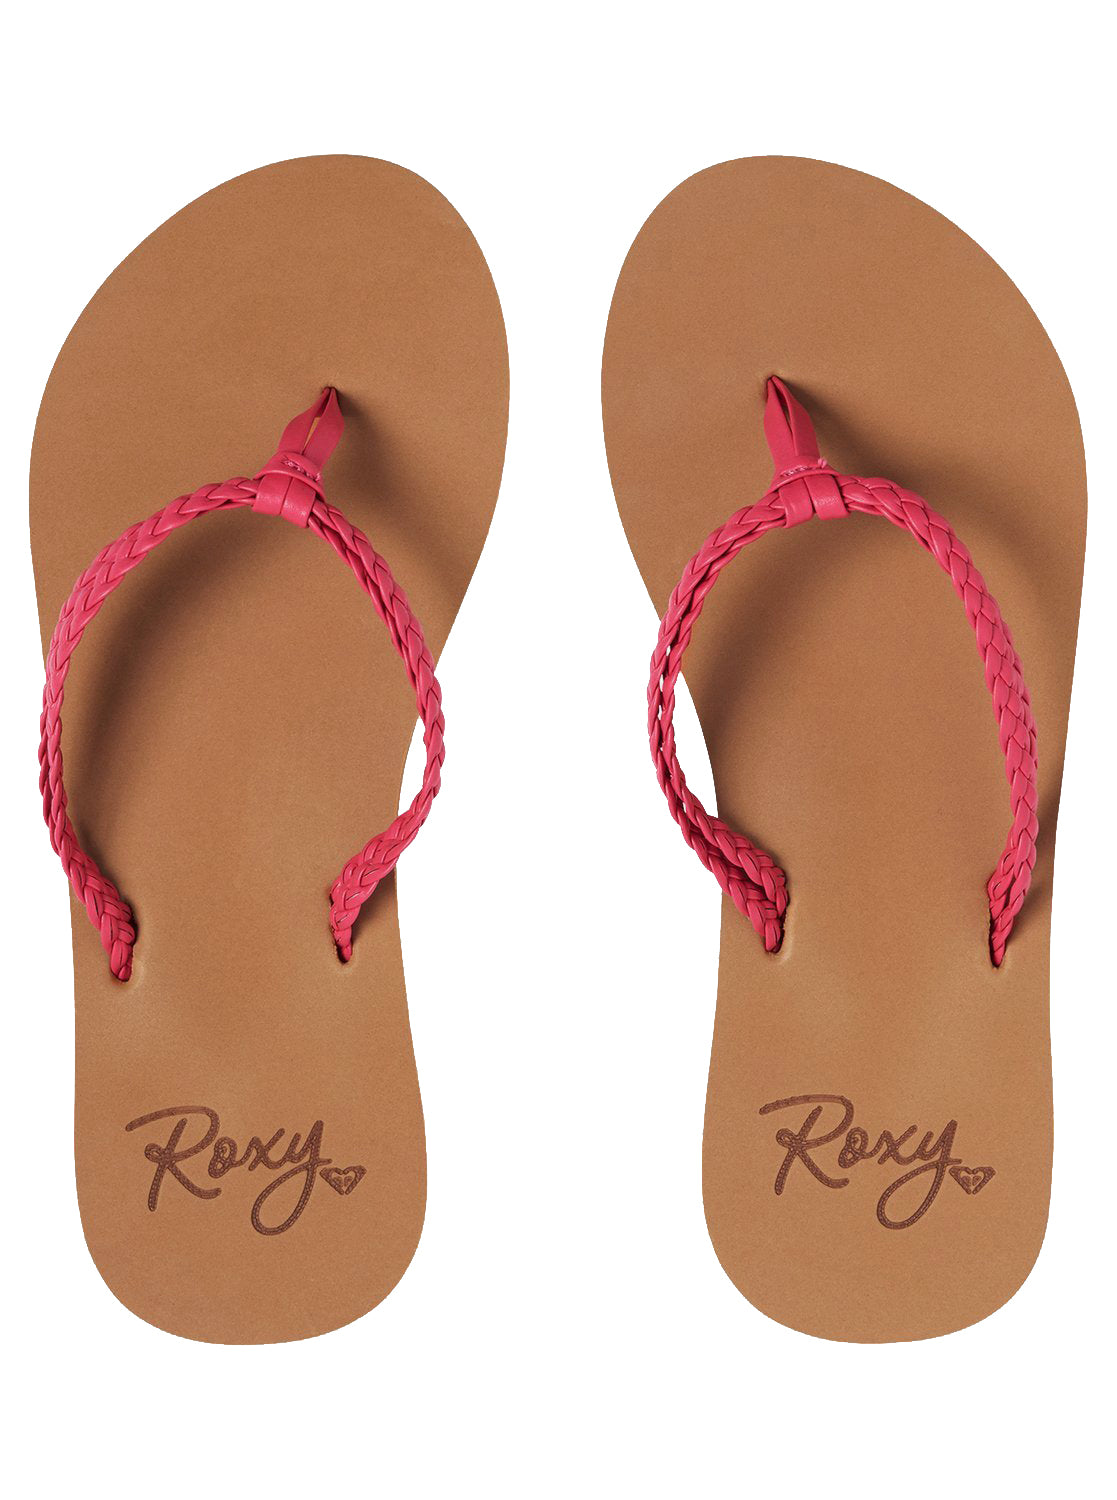 Roxy Costas 2 Girls Sandal RAS-Raspberry 4 Y